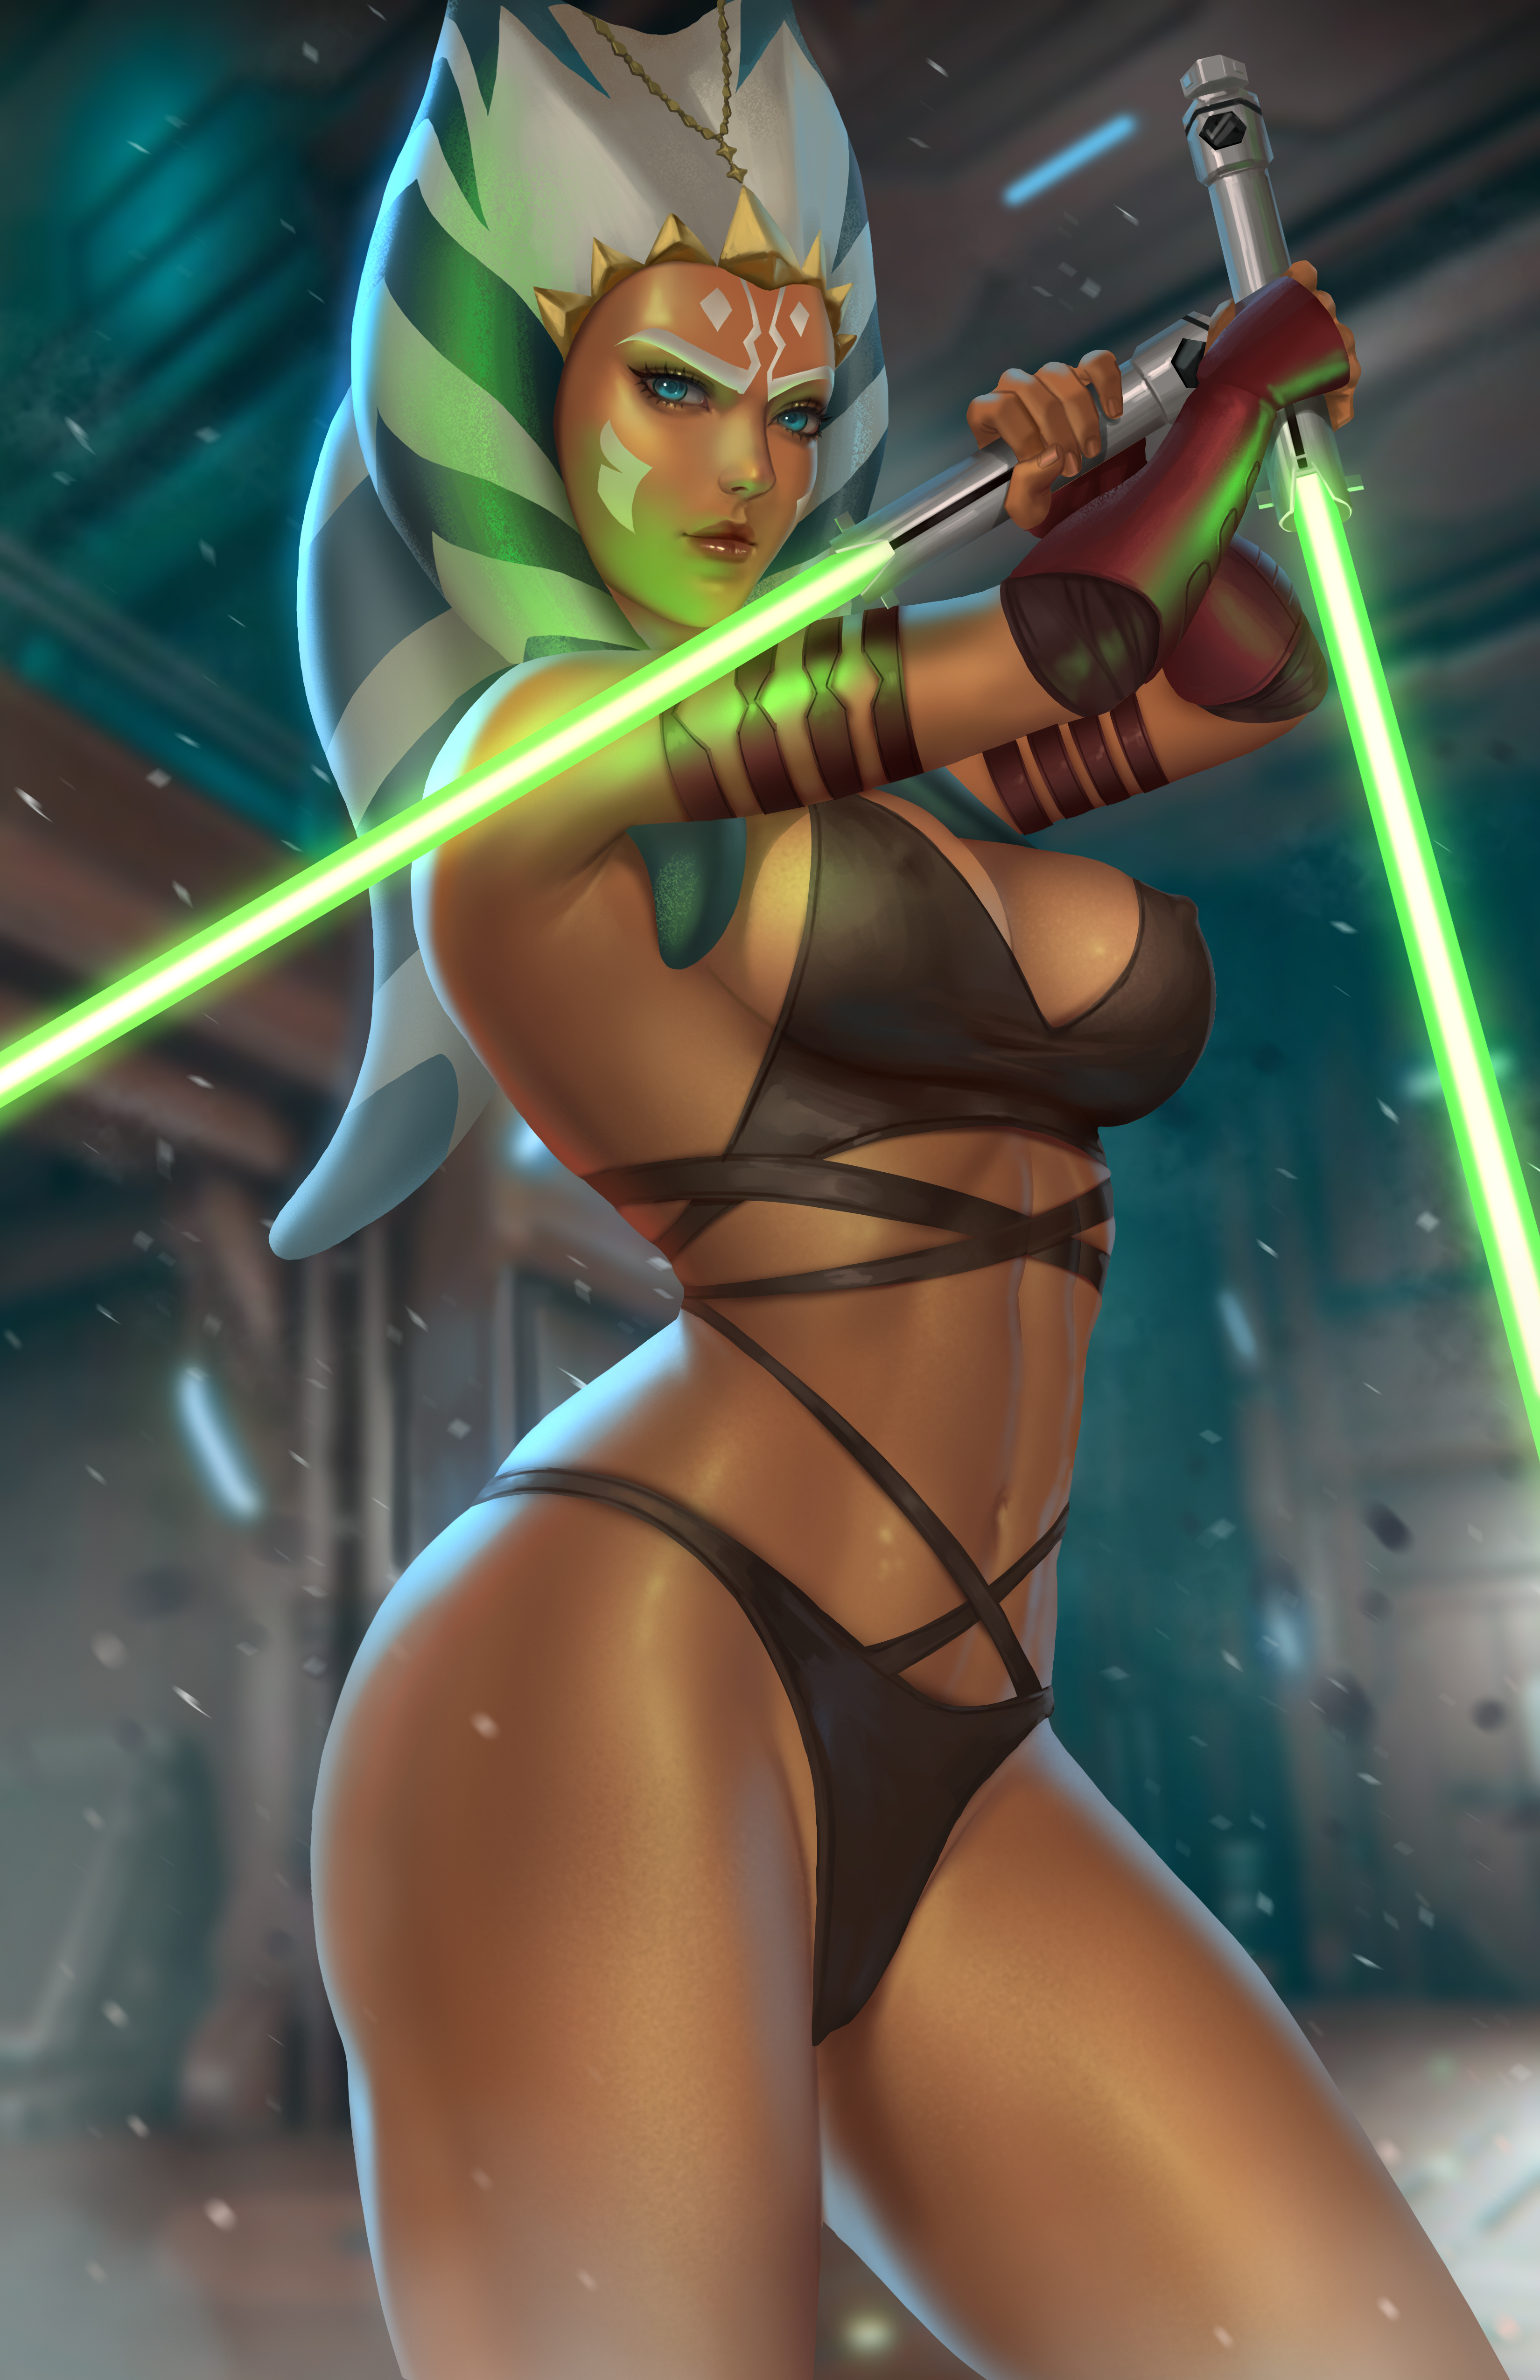 Star Wars Jedi fictional character fantasy girl bikini arm warmers 2D artwo...